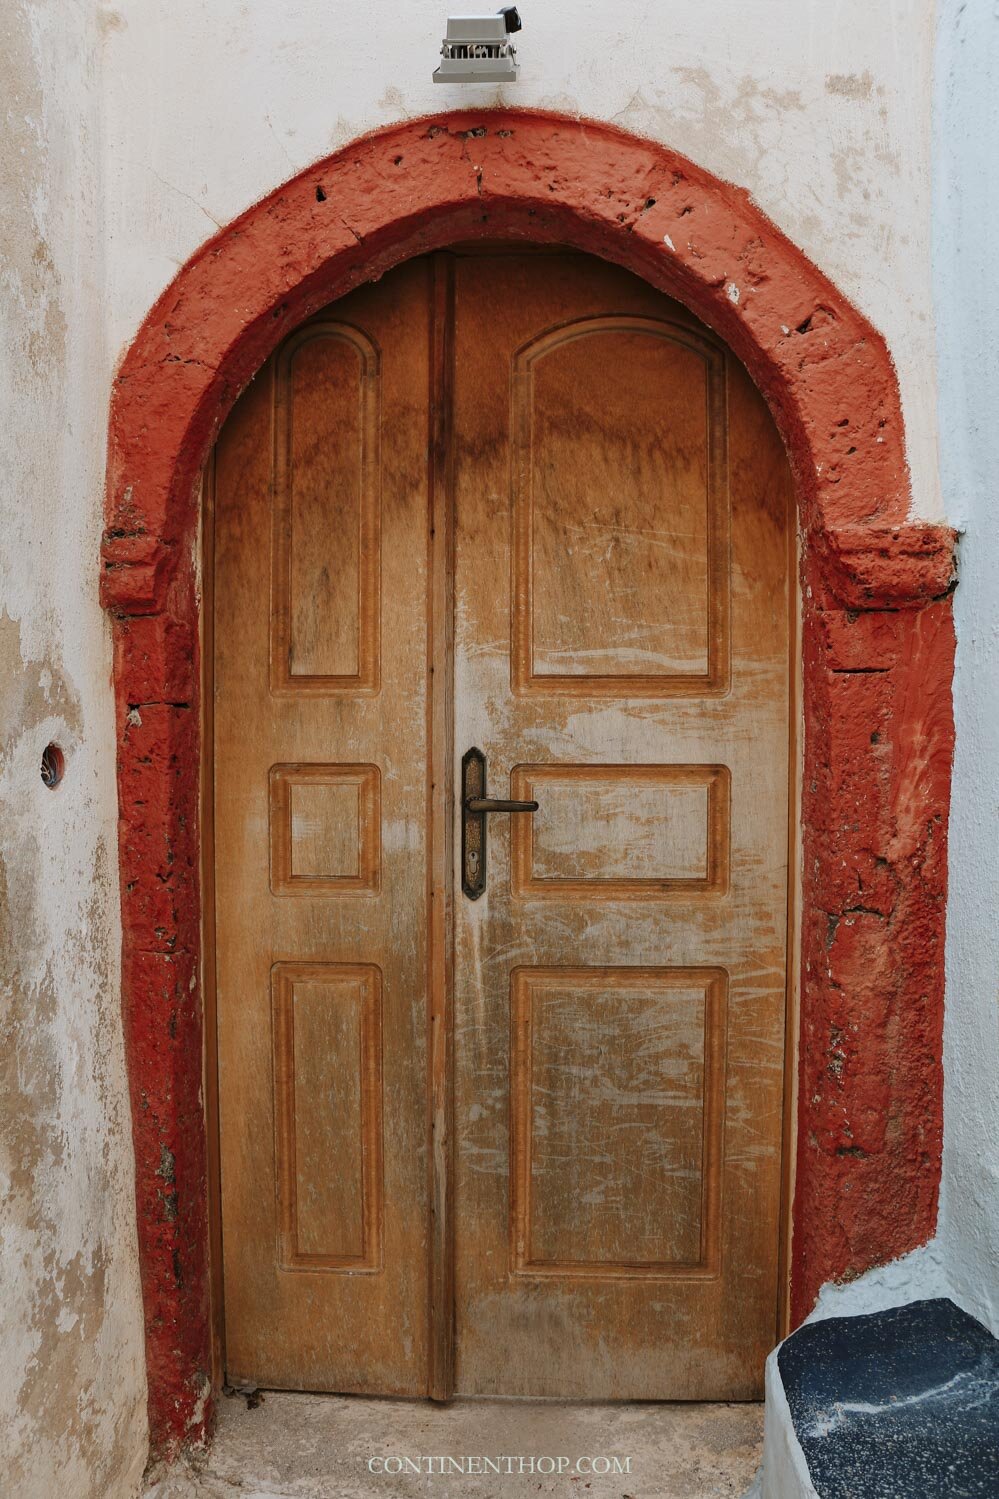 A red and yellow door in Emporio village Santorini Greece